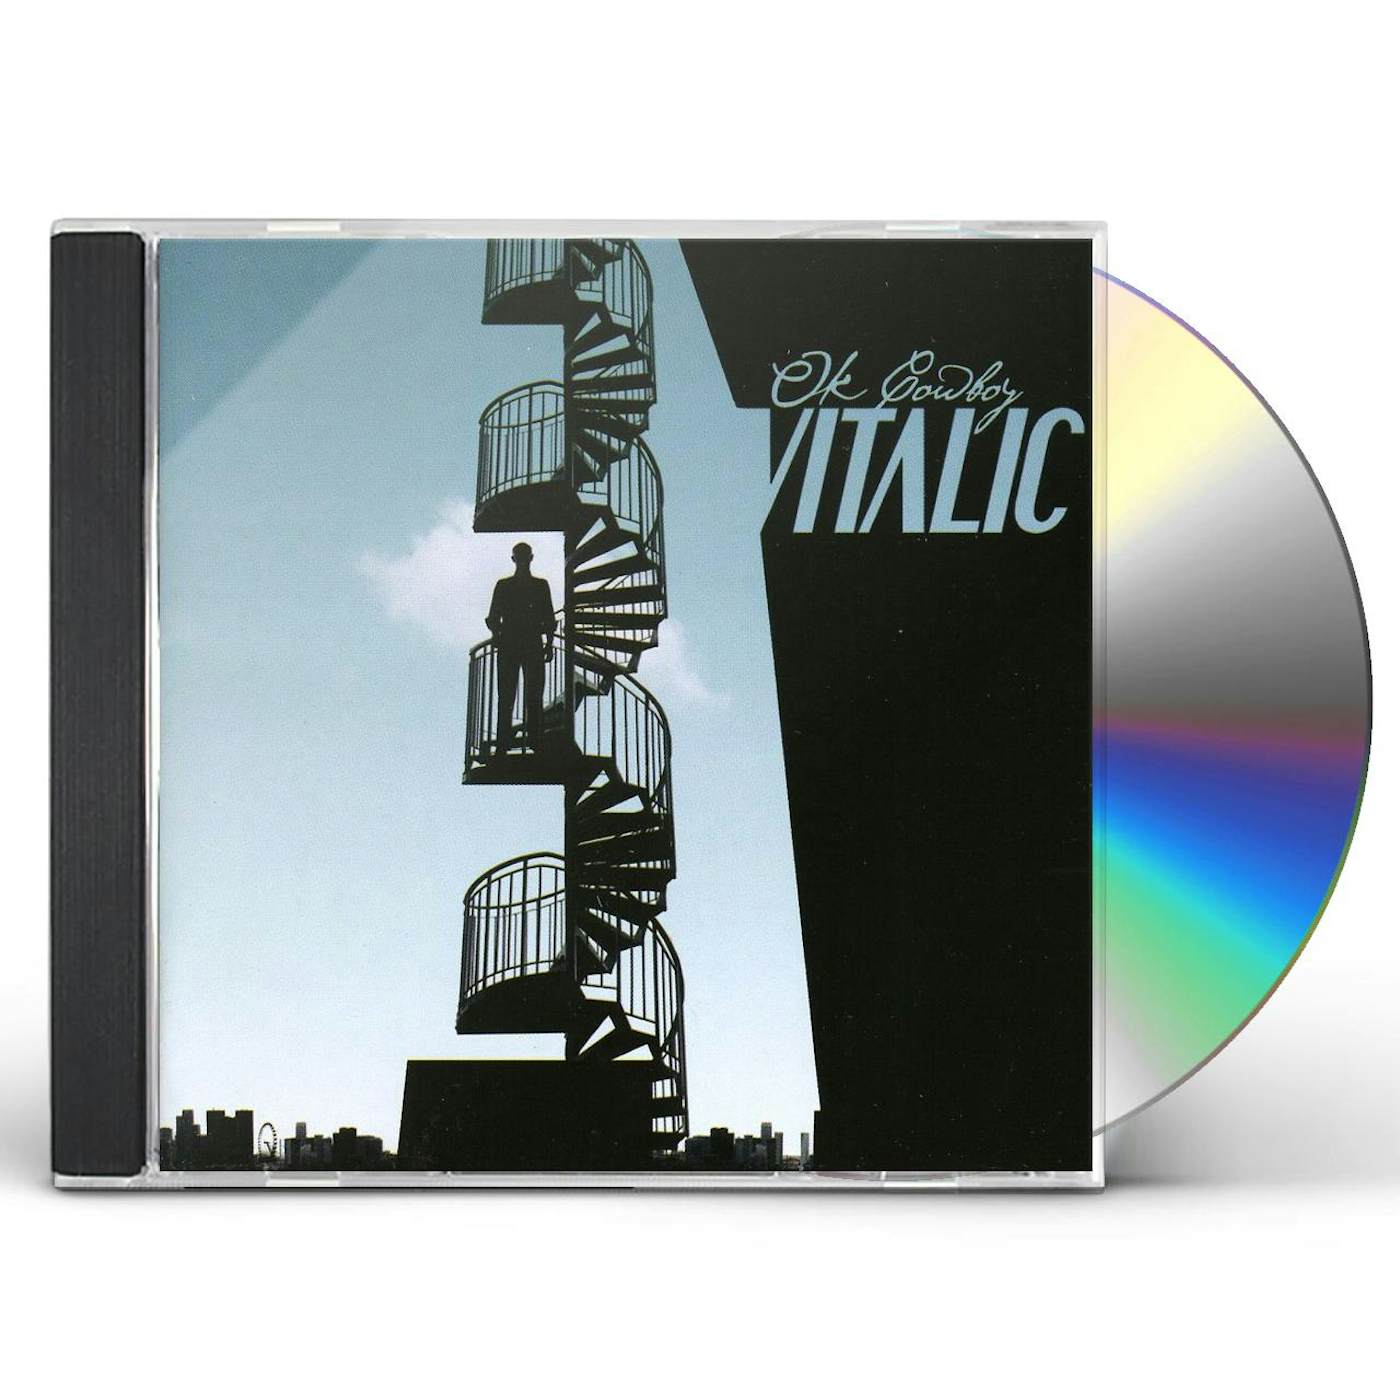 Vitalic OK COWBOY CD